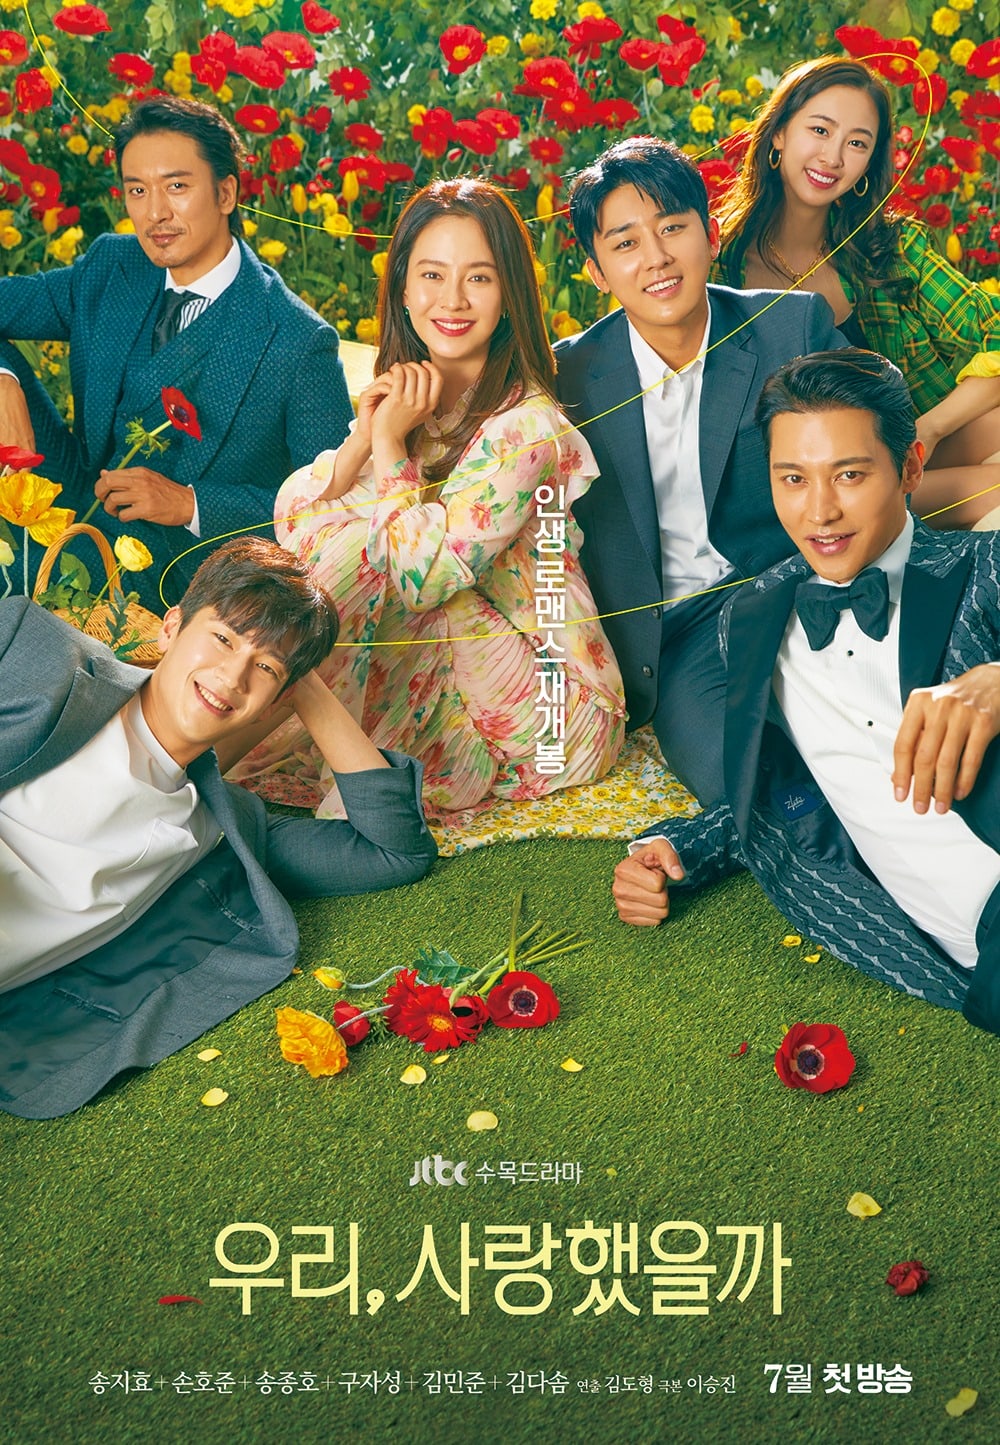 song-ji-hyo-upcoming-jtbc-romance-drama-did-we-love-reveals-main-poster-1